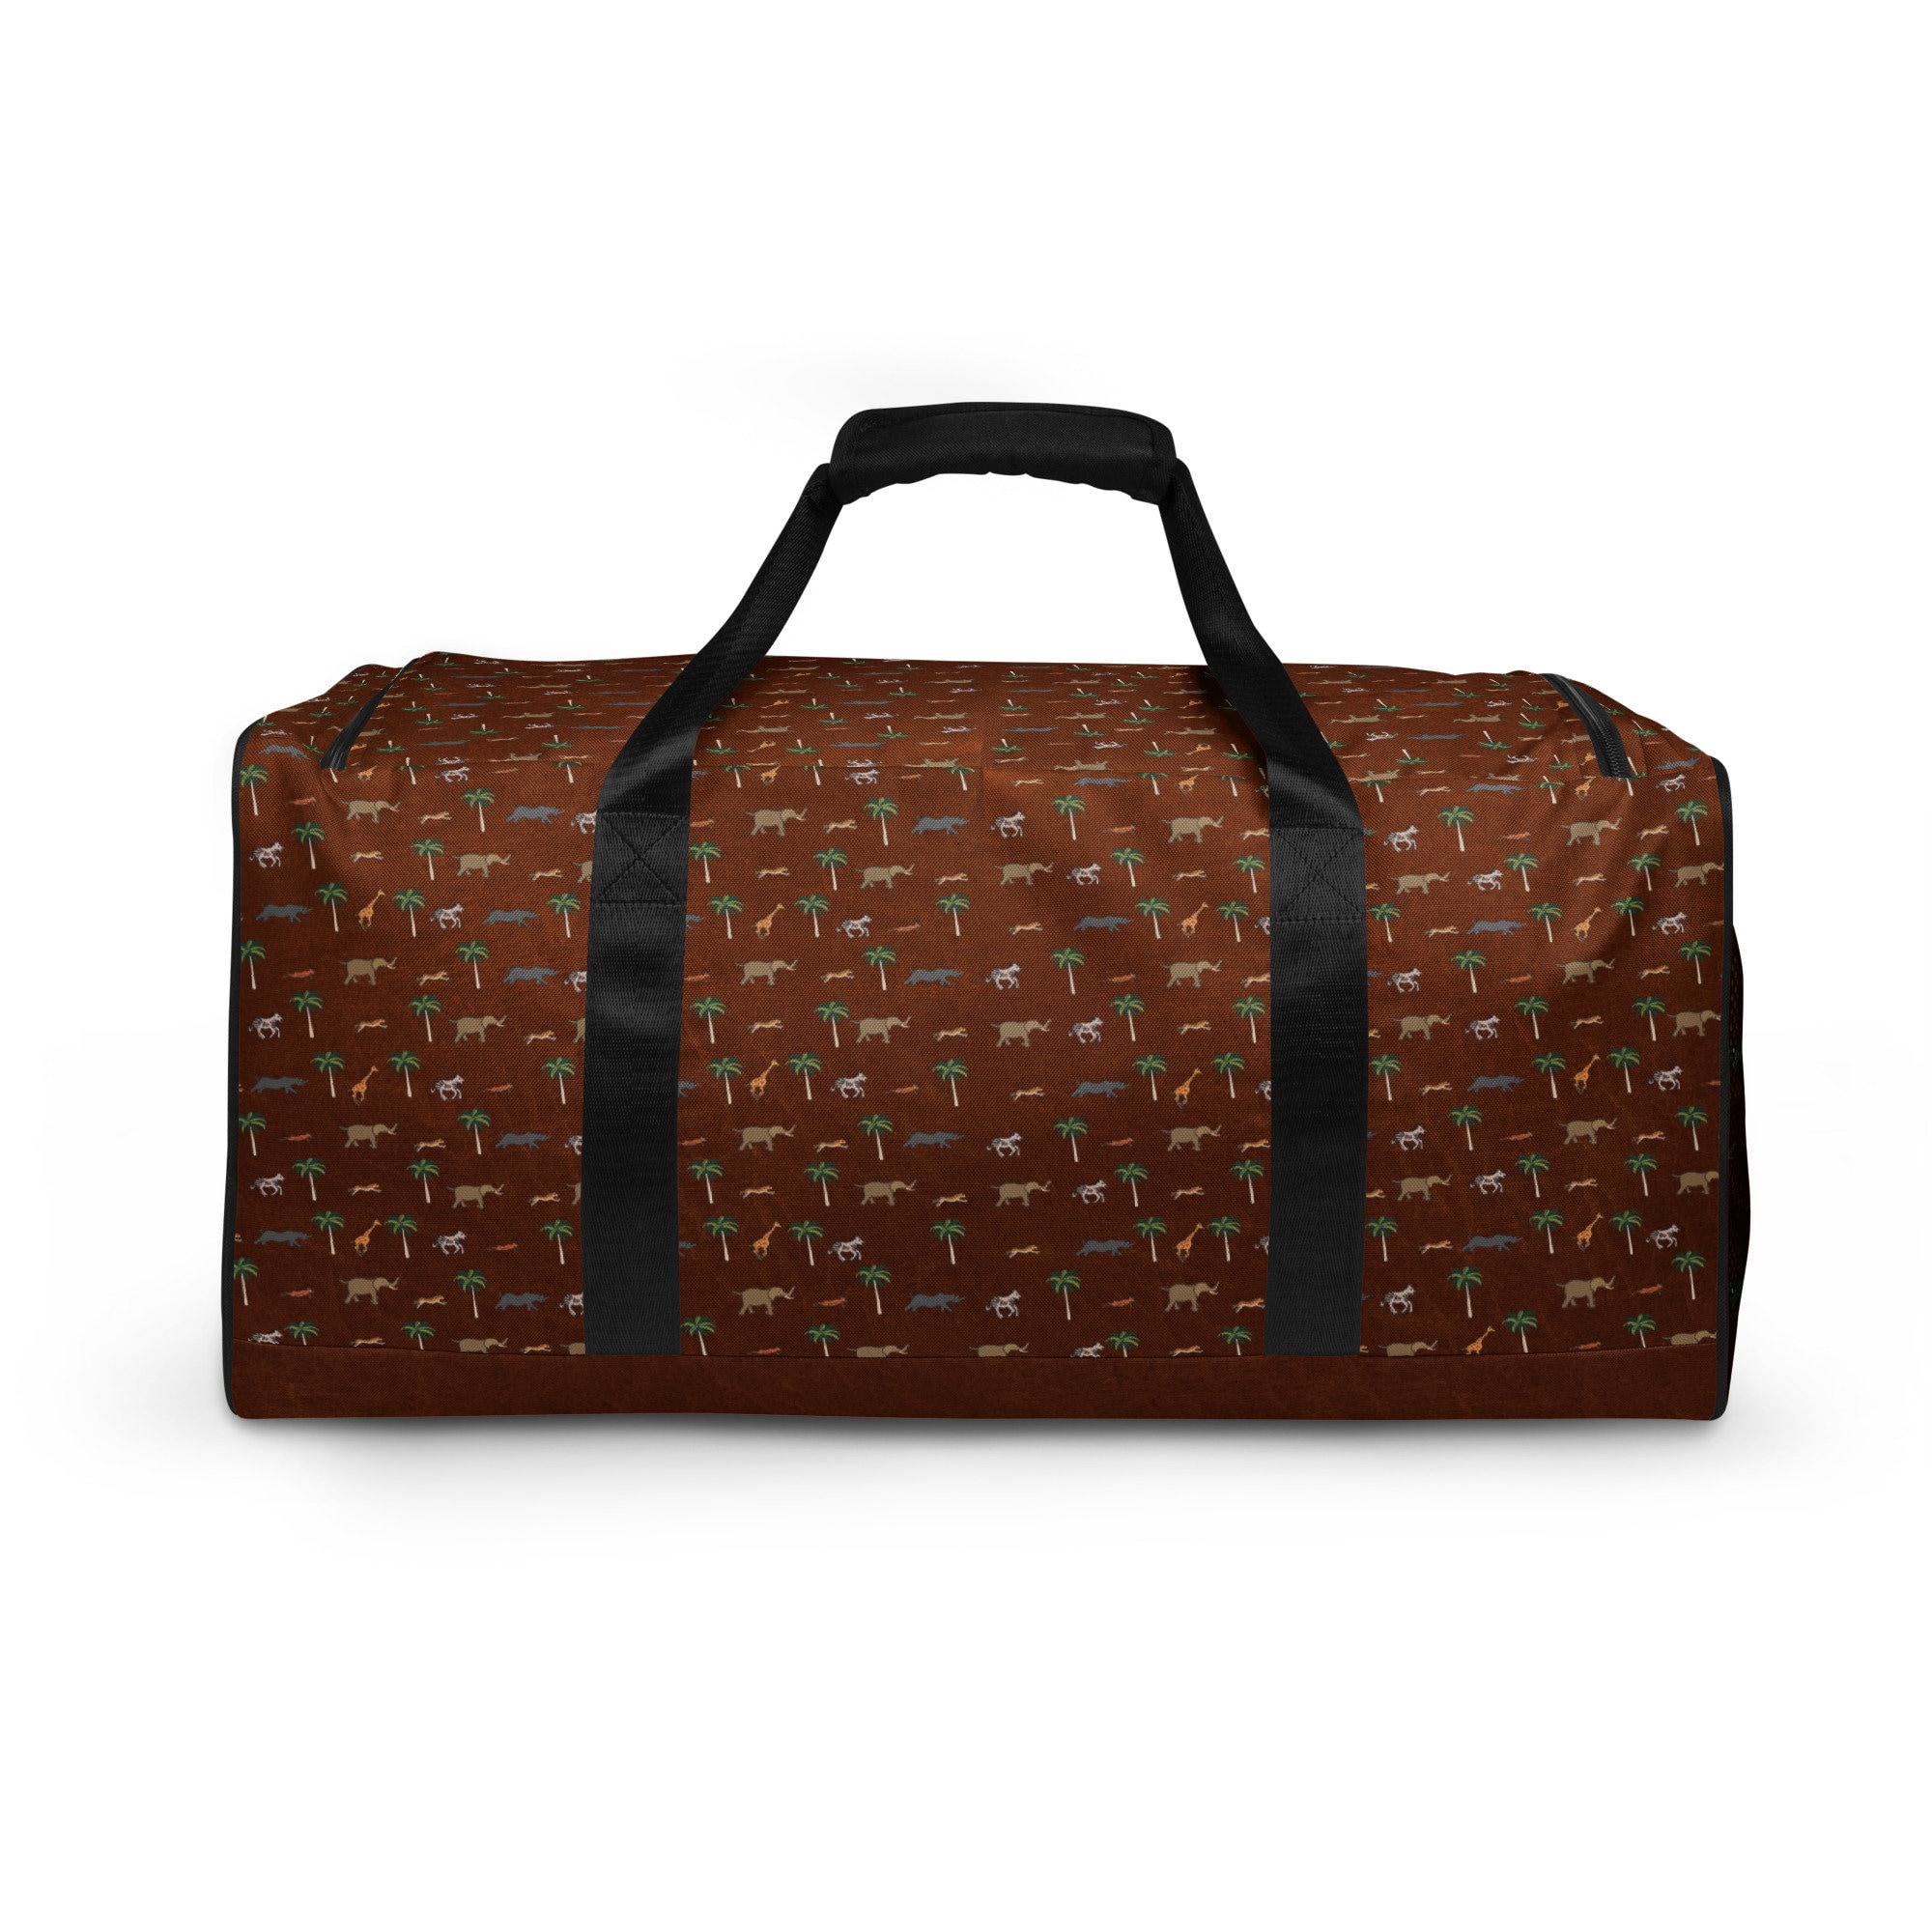 Darjeeling Limited Luggage 